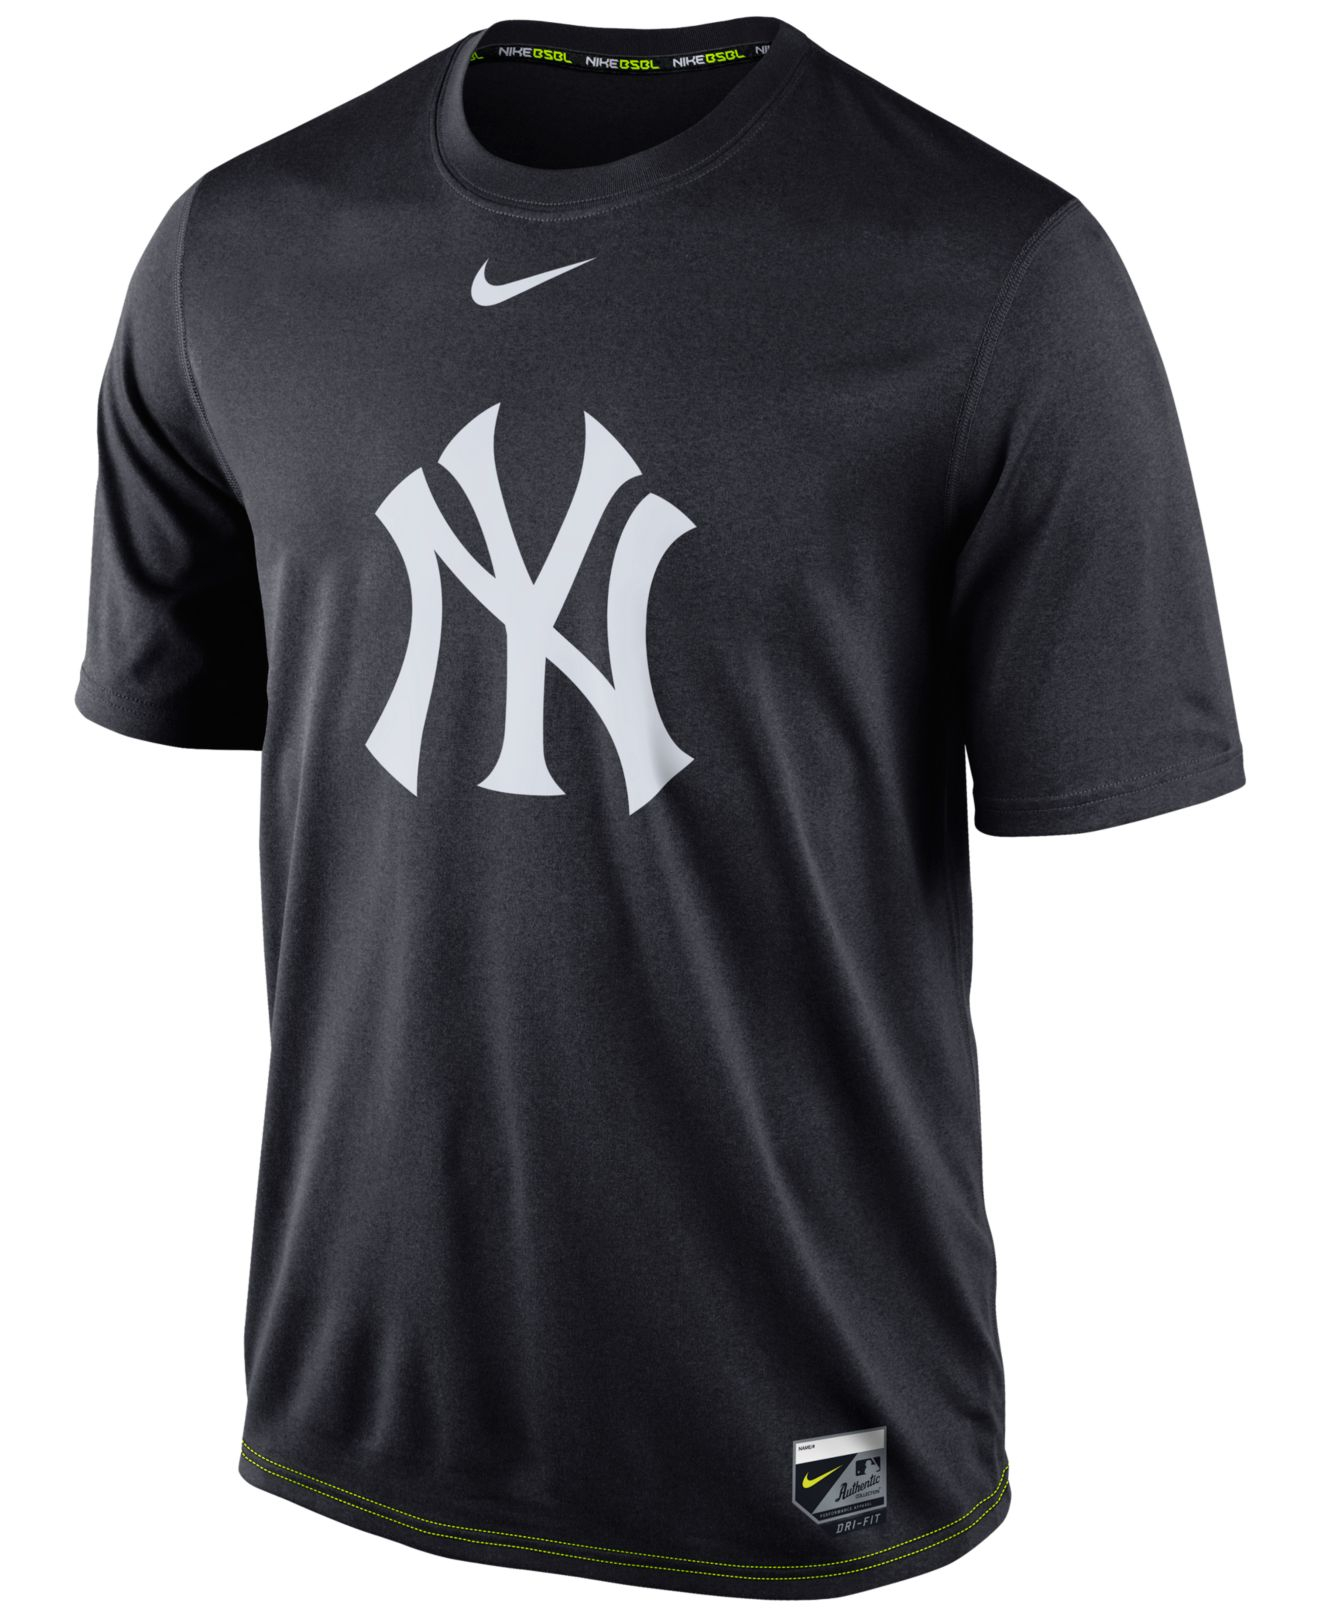 Lyst - Nike Men's New York Yankees Dri-fit Legend T-shirt in Blue for Men